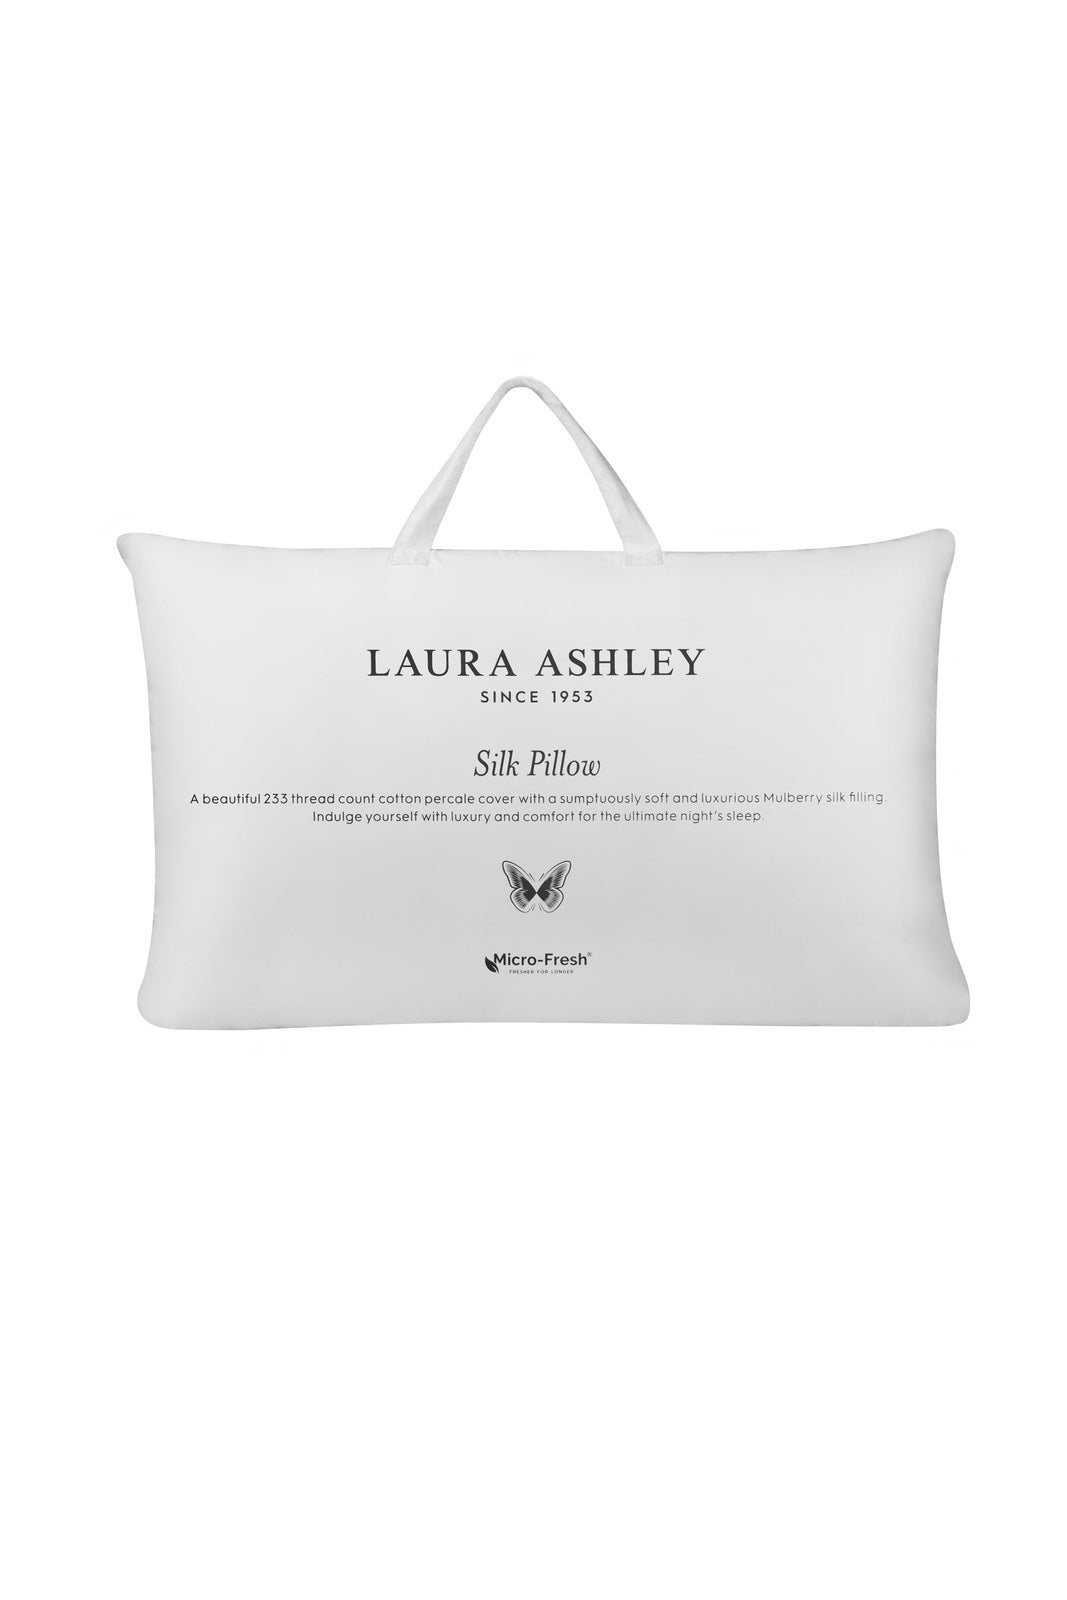 Laura Ashley Silk Pillow 1 Shaws Department Stores